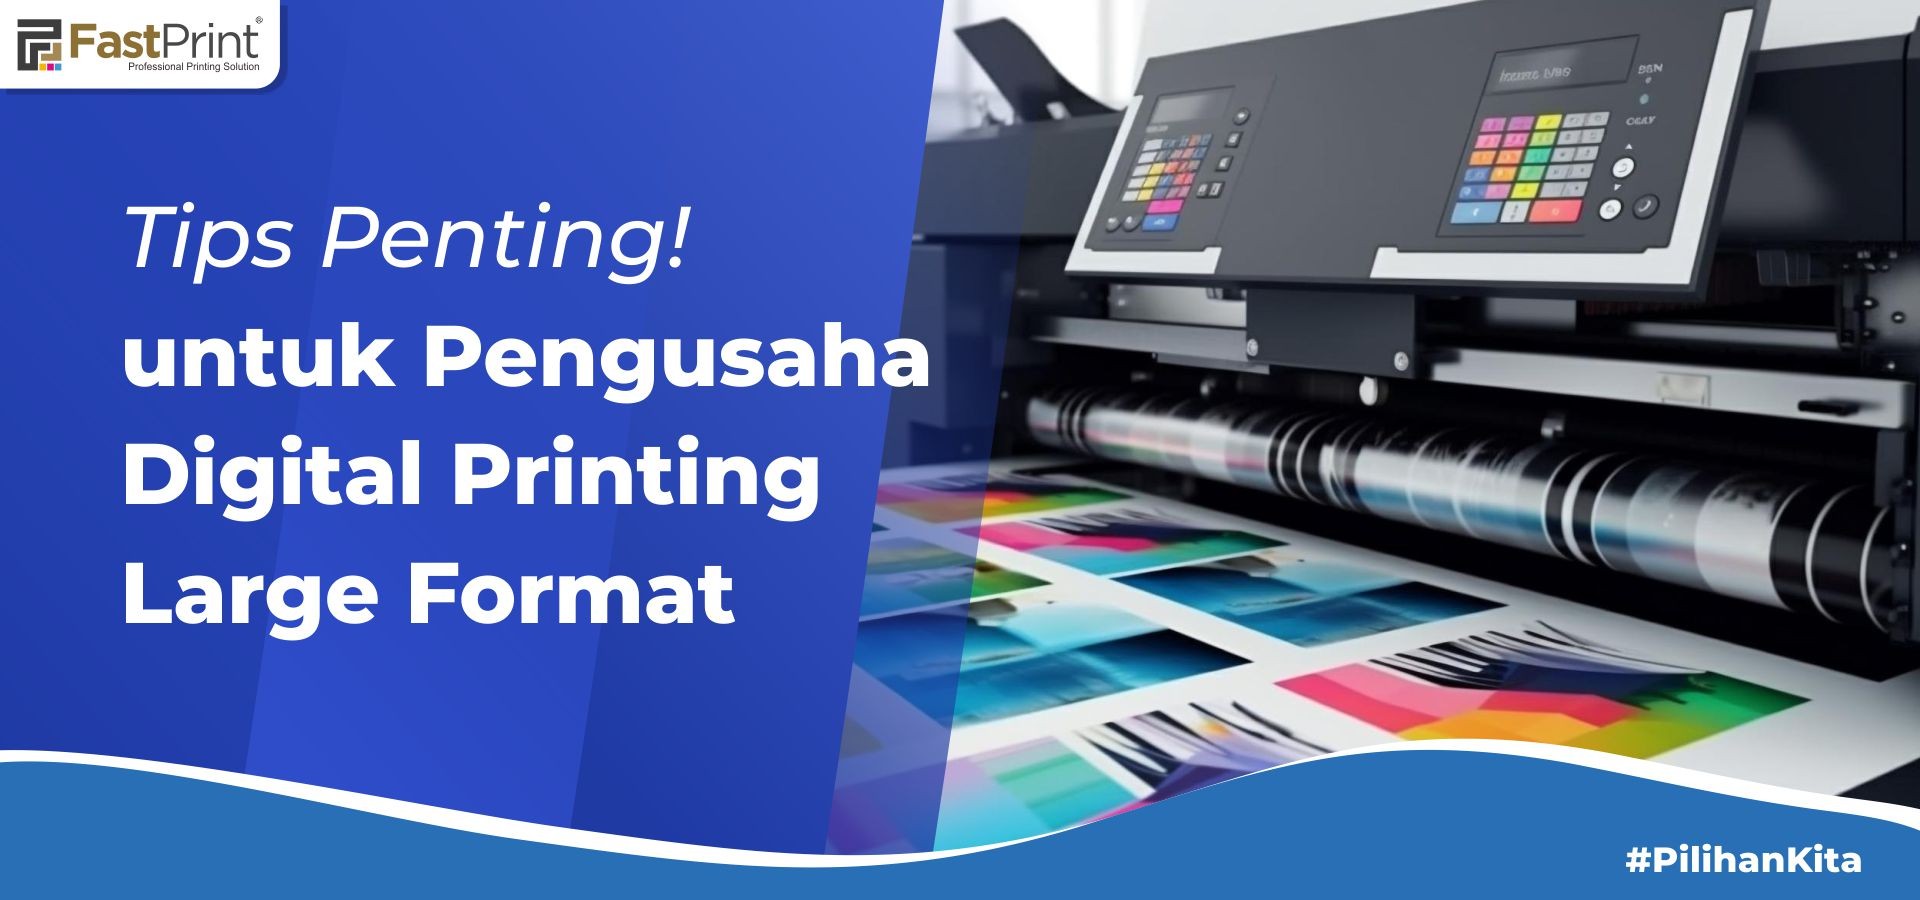 Tips Penting Pengusaha Digital Printing